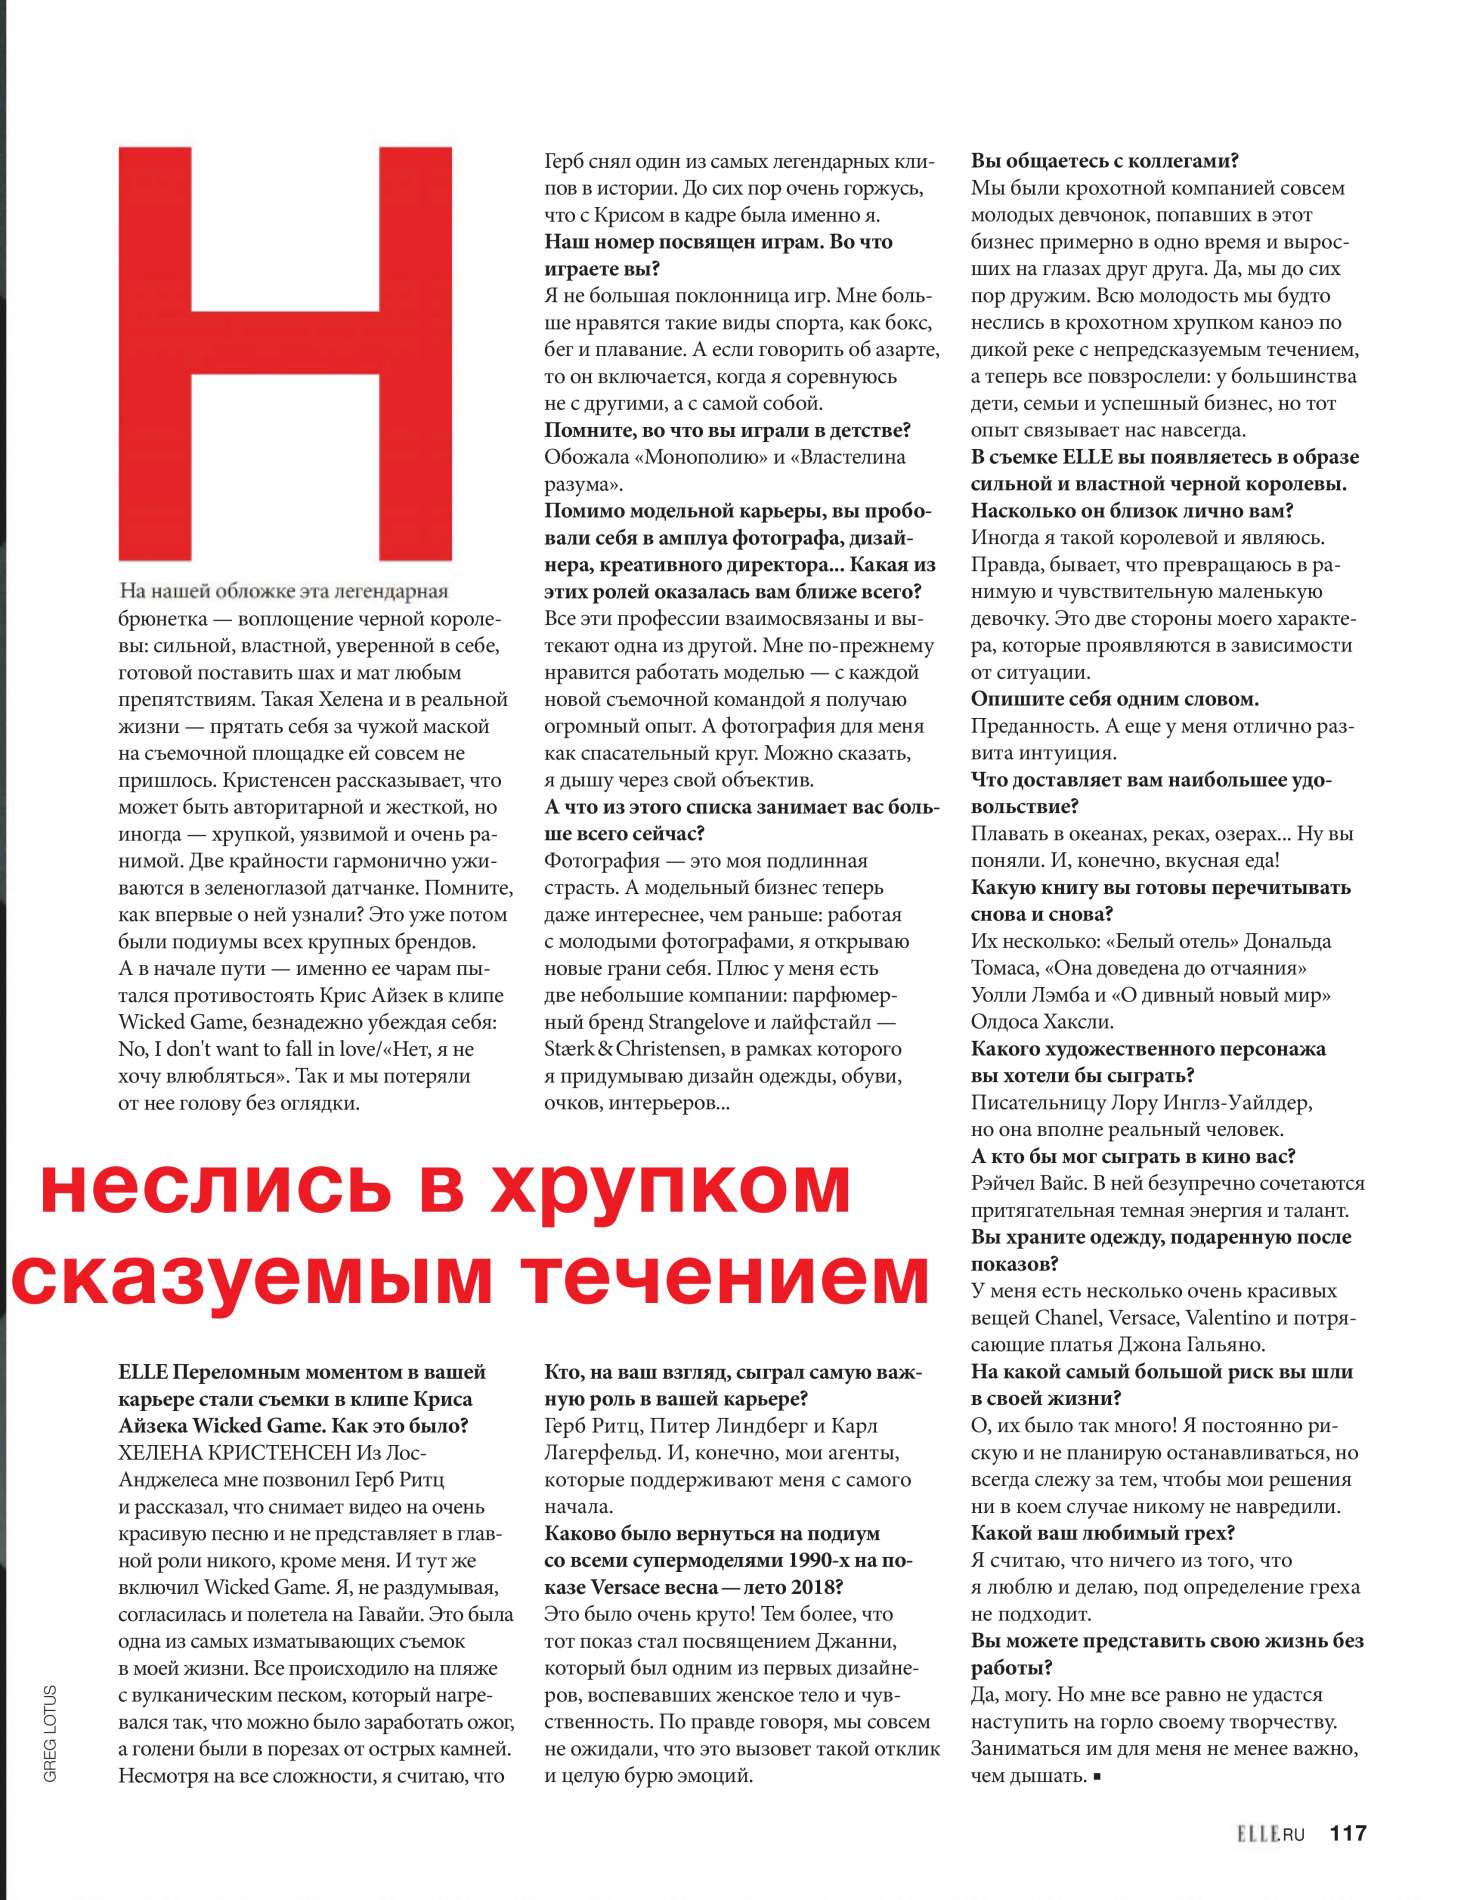 Helena Christensen â€“ Elle Russia Magazine (February 2019)